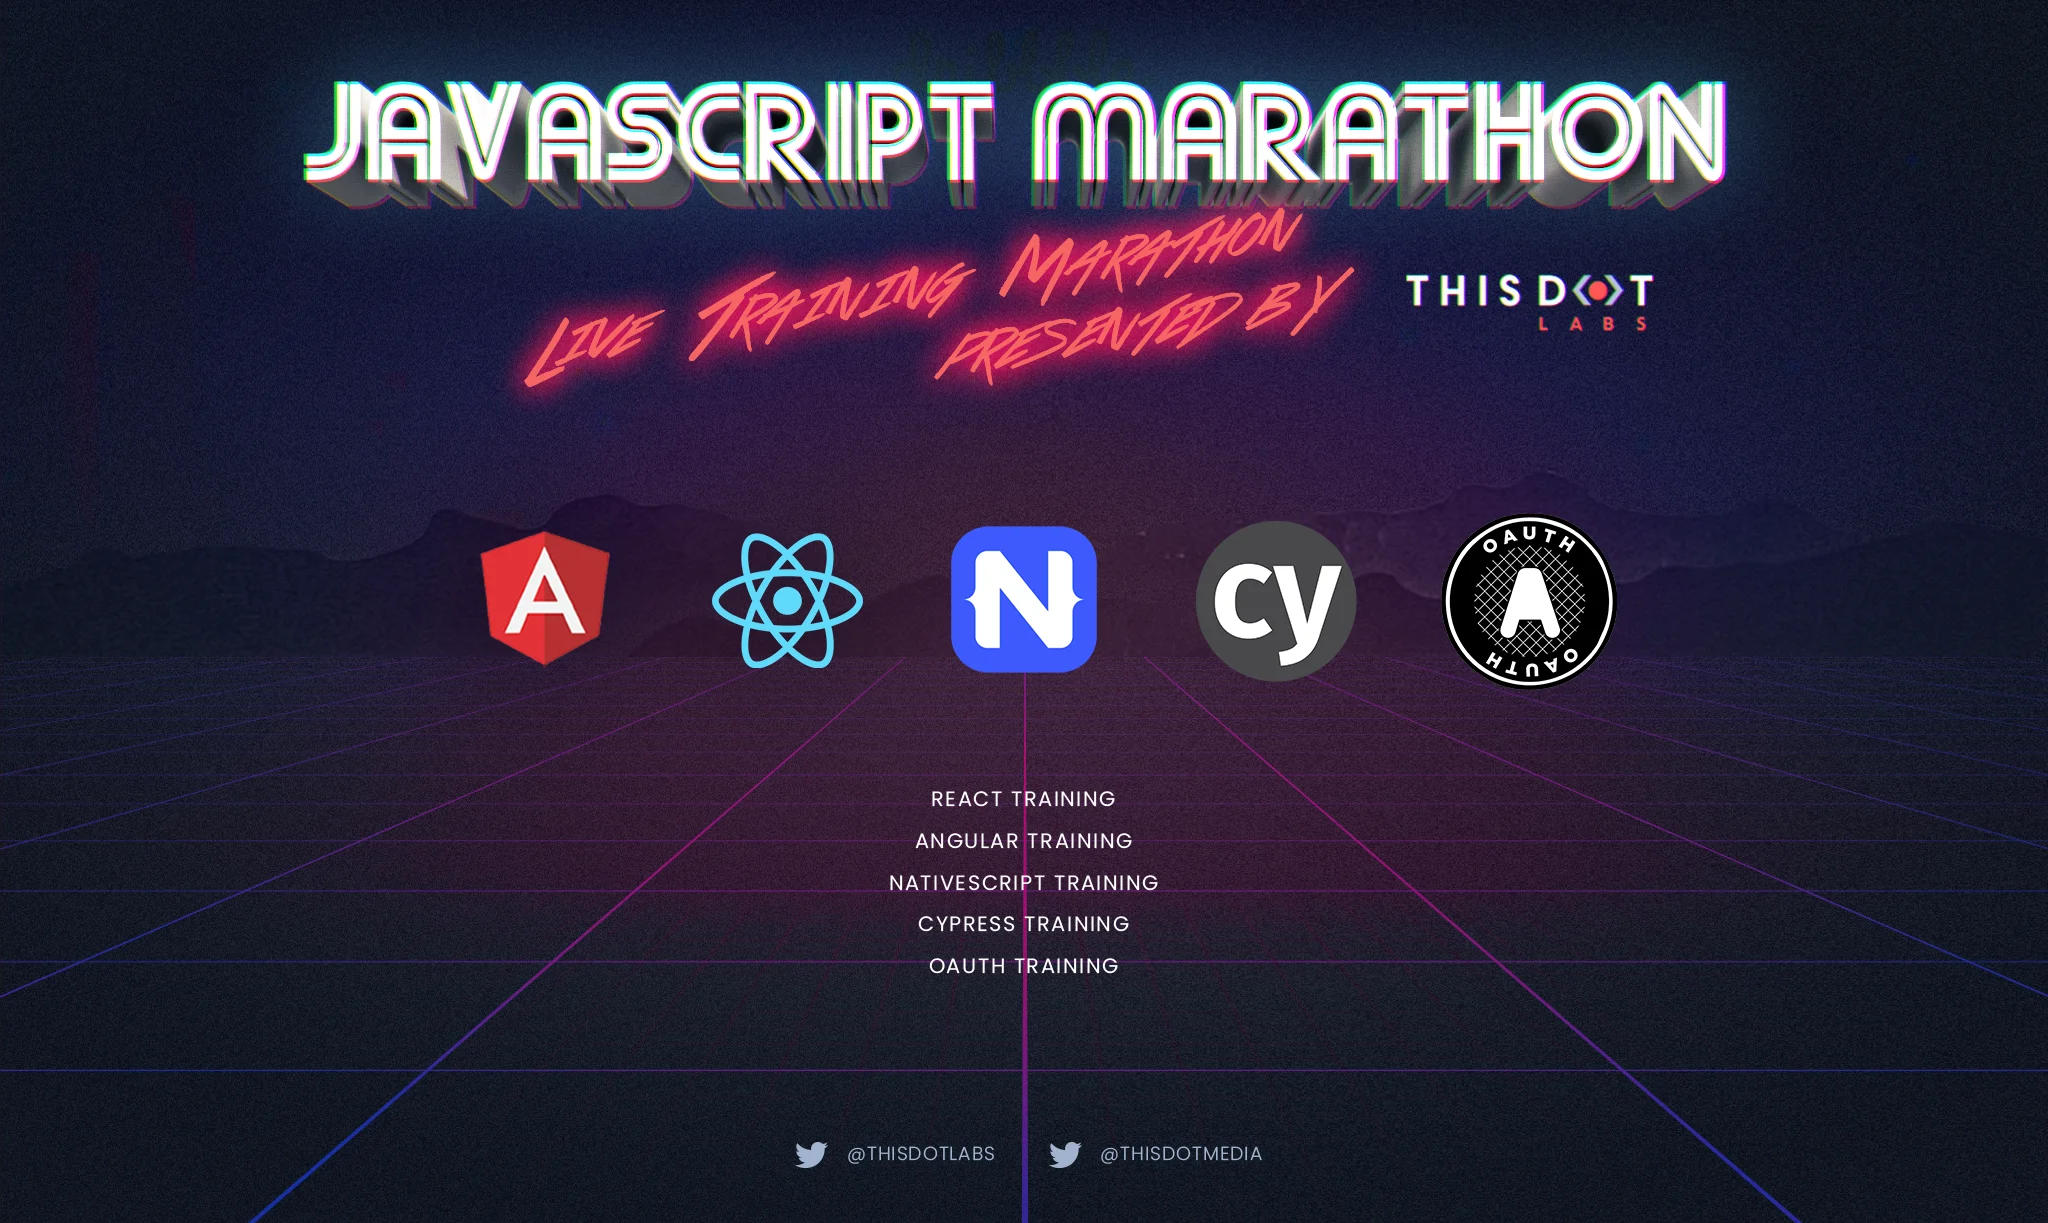 Announcing July JavaScript Marathon - Free, online training!